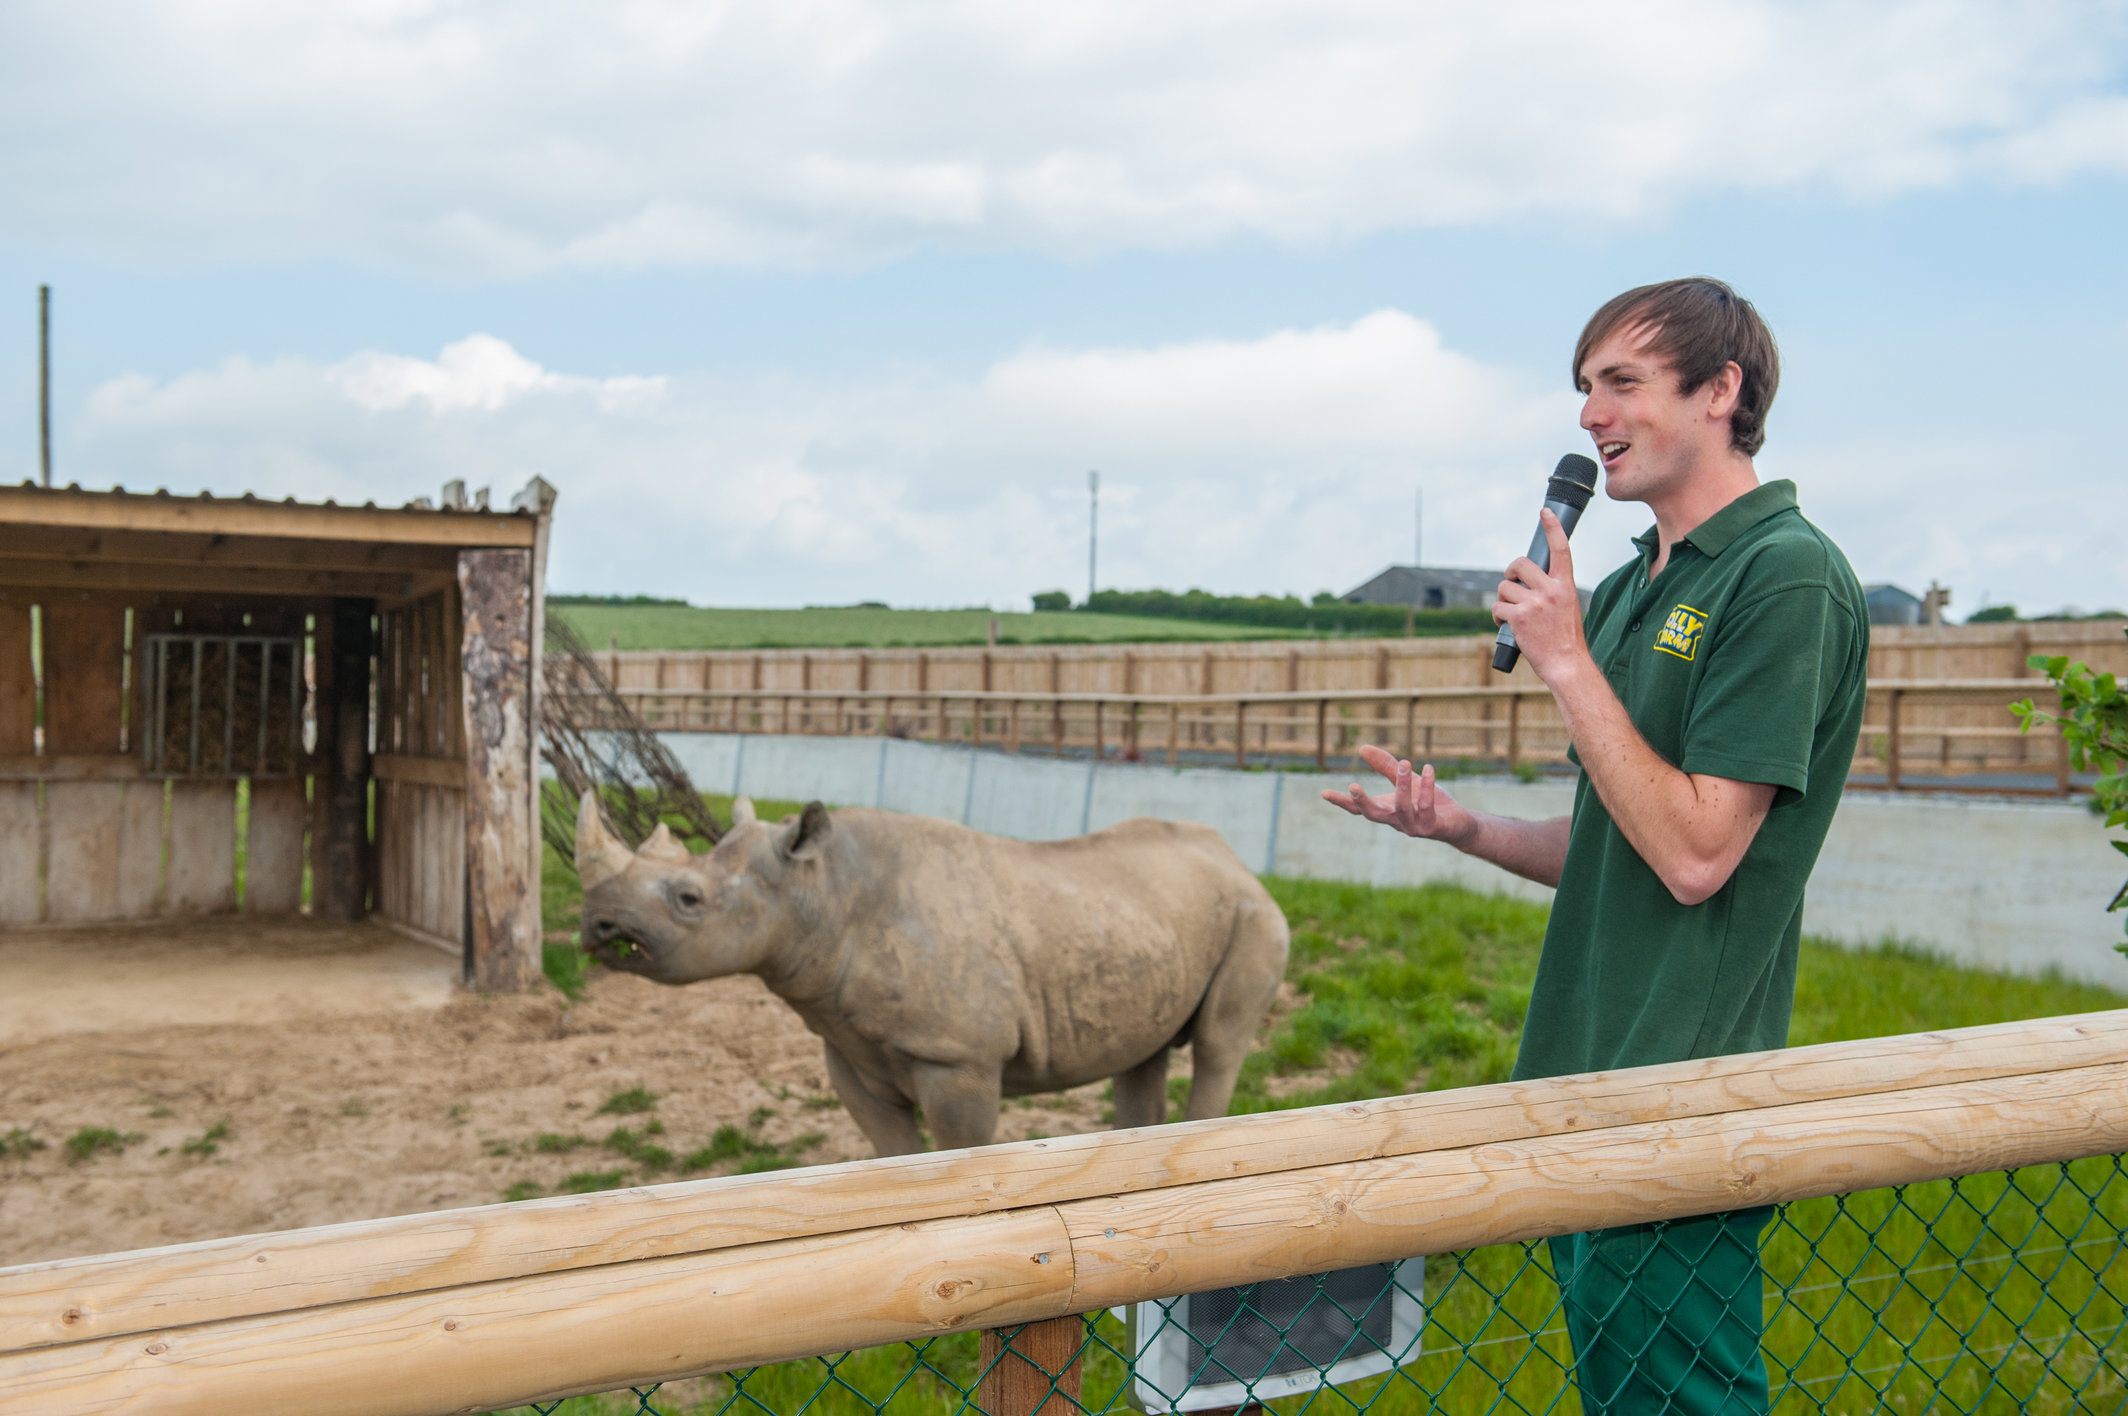 Rhino keeper giving a talk